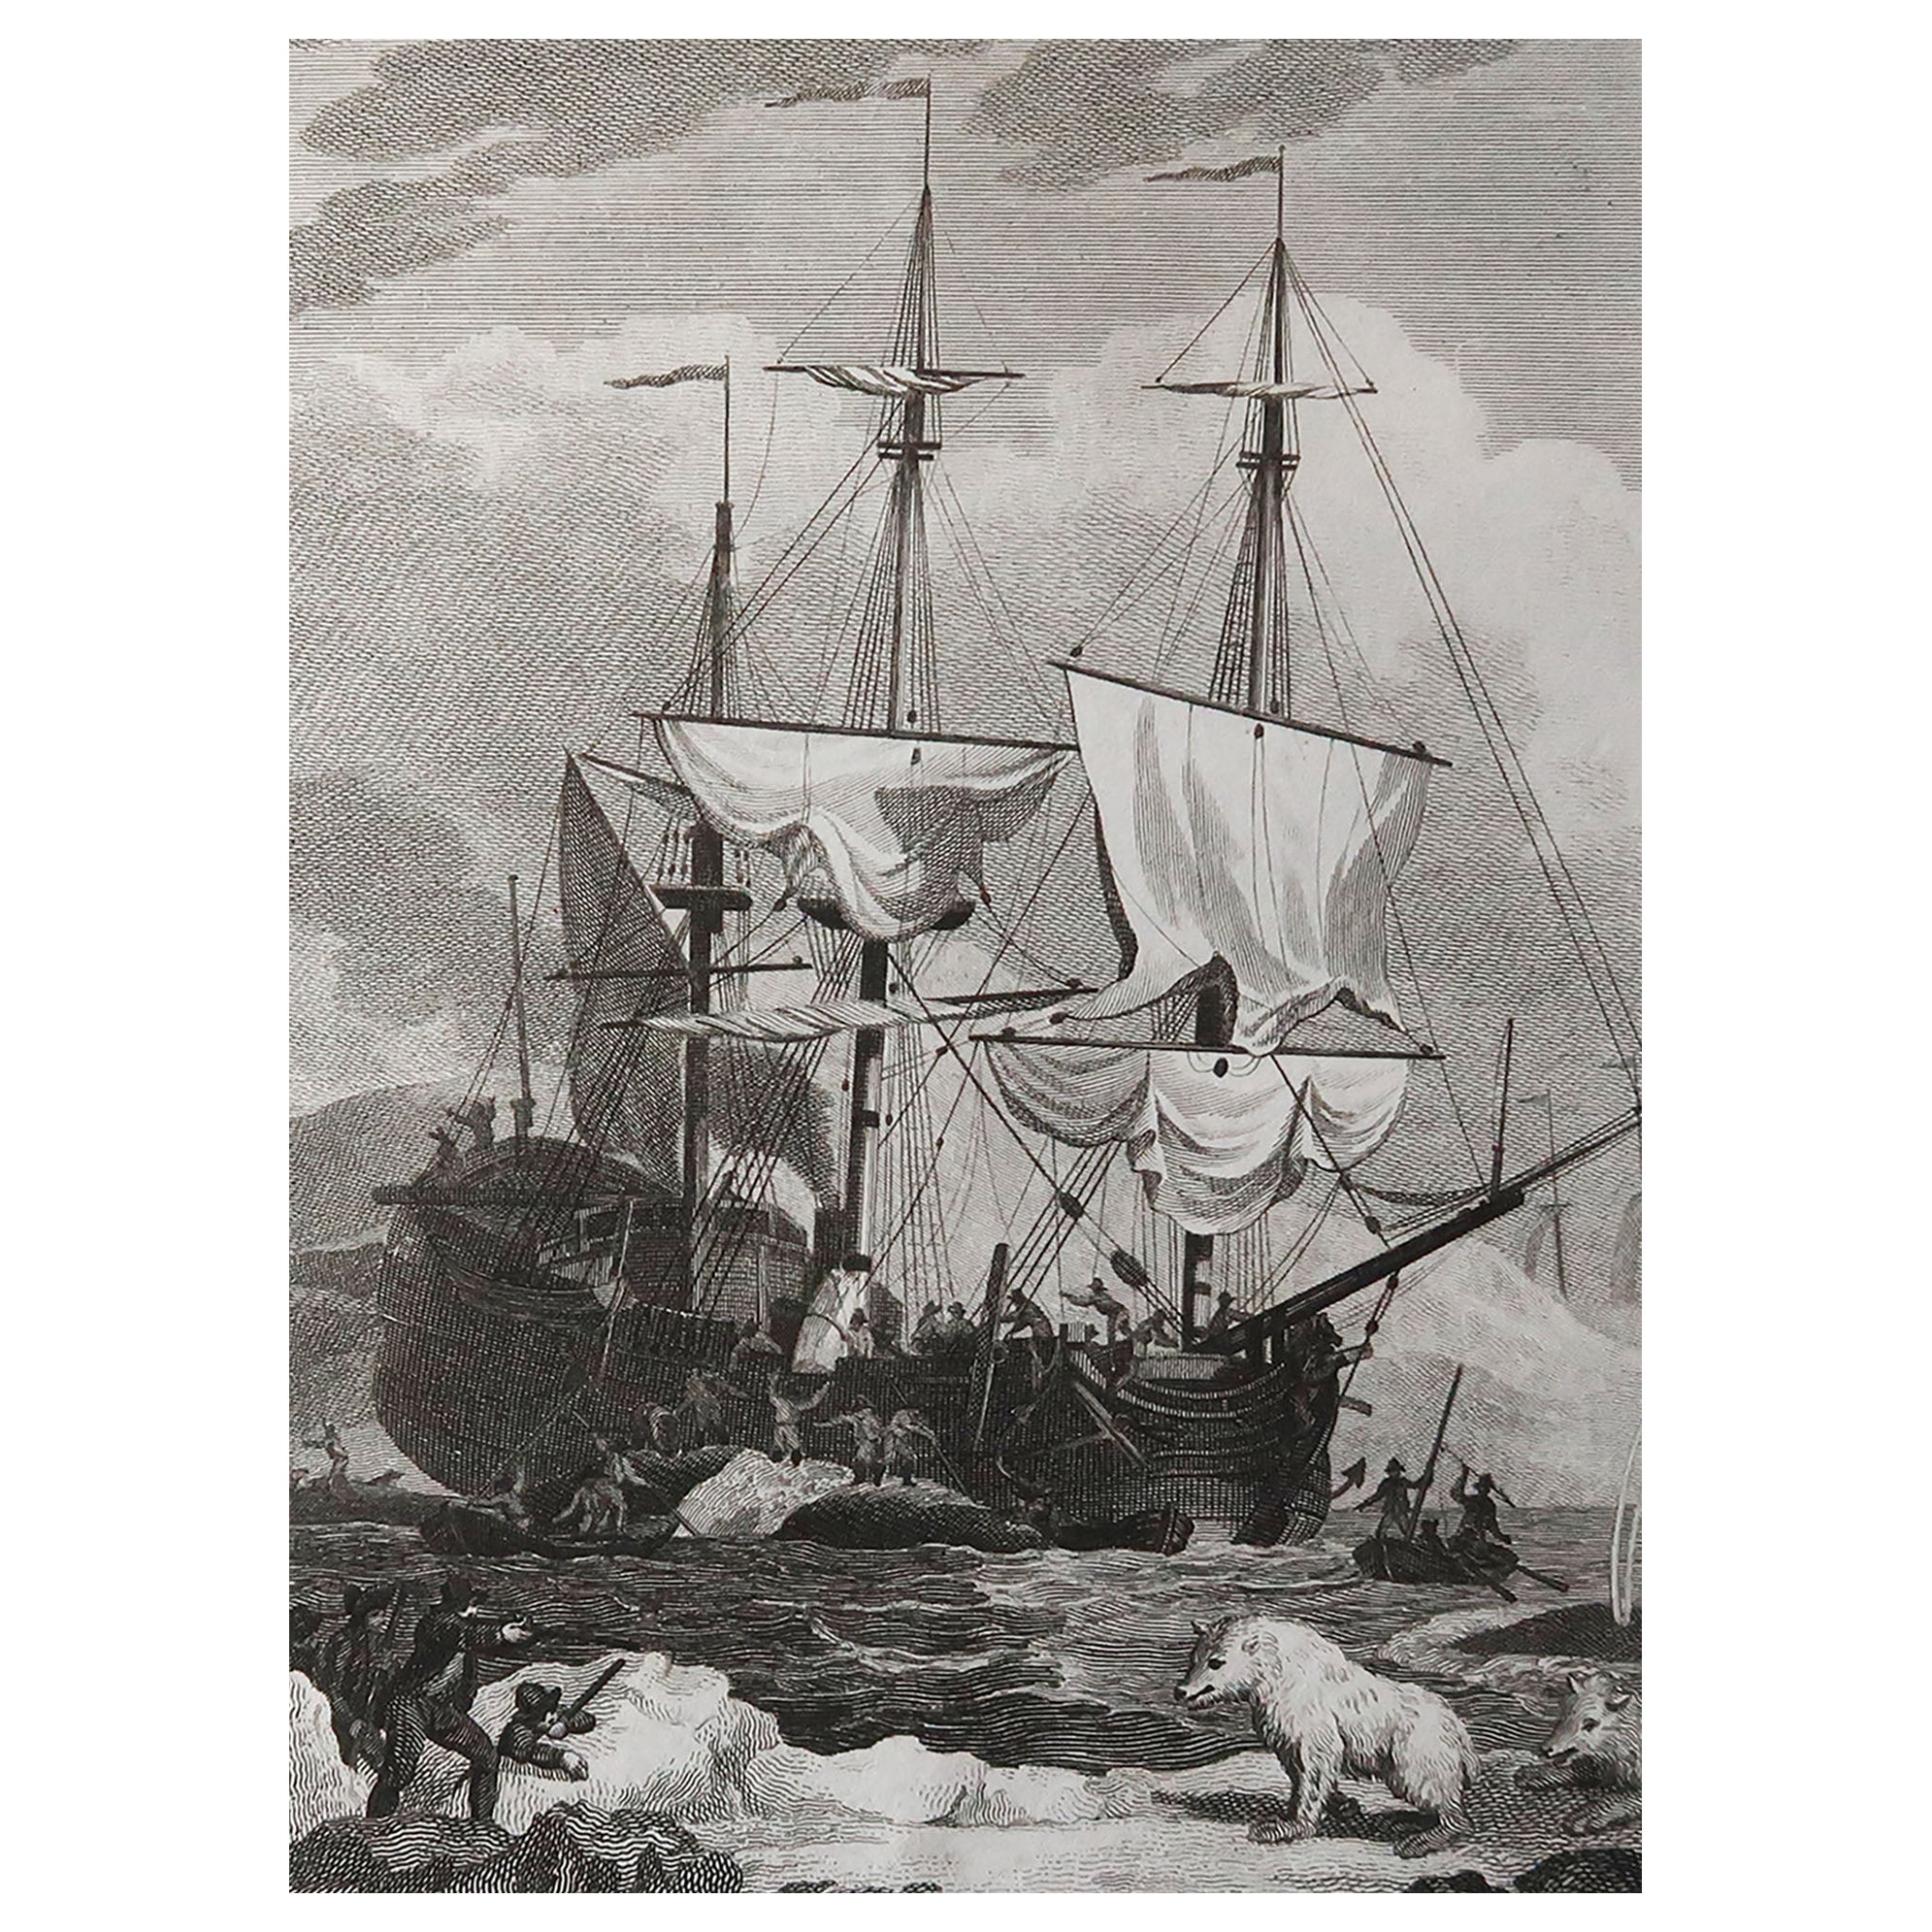 Original Antique Whaling Print, Circa 1800